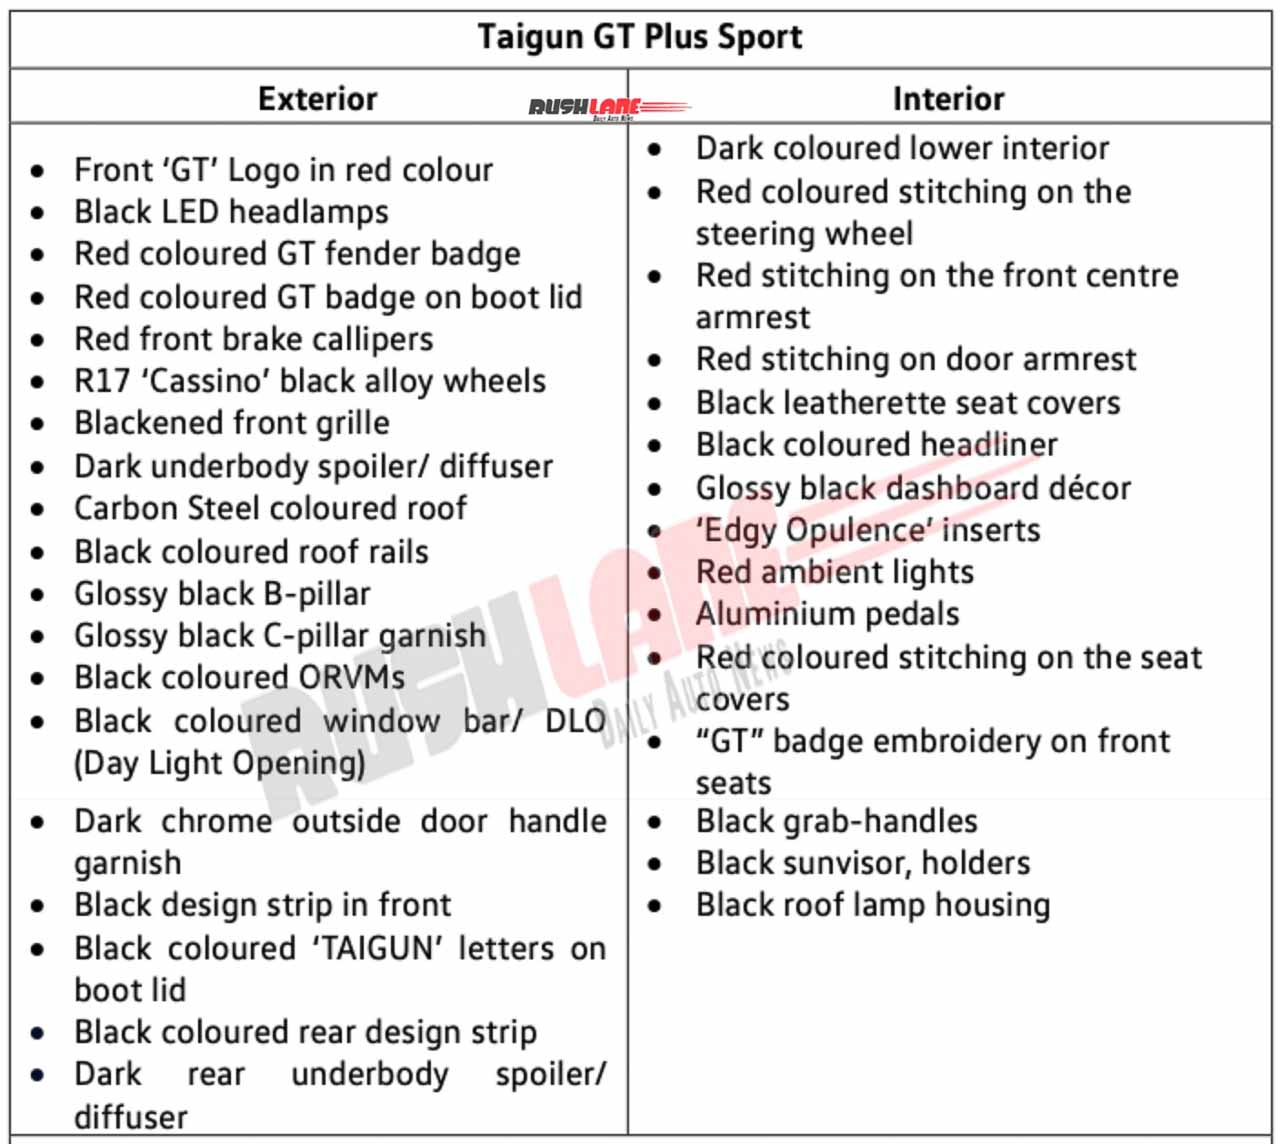 VW Taigun GT Plus Sport Features List